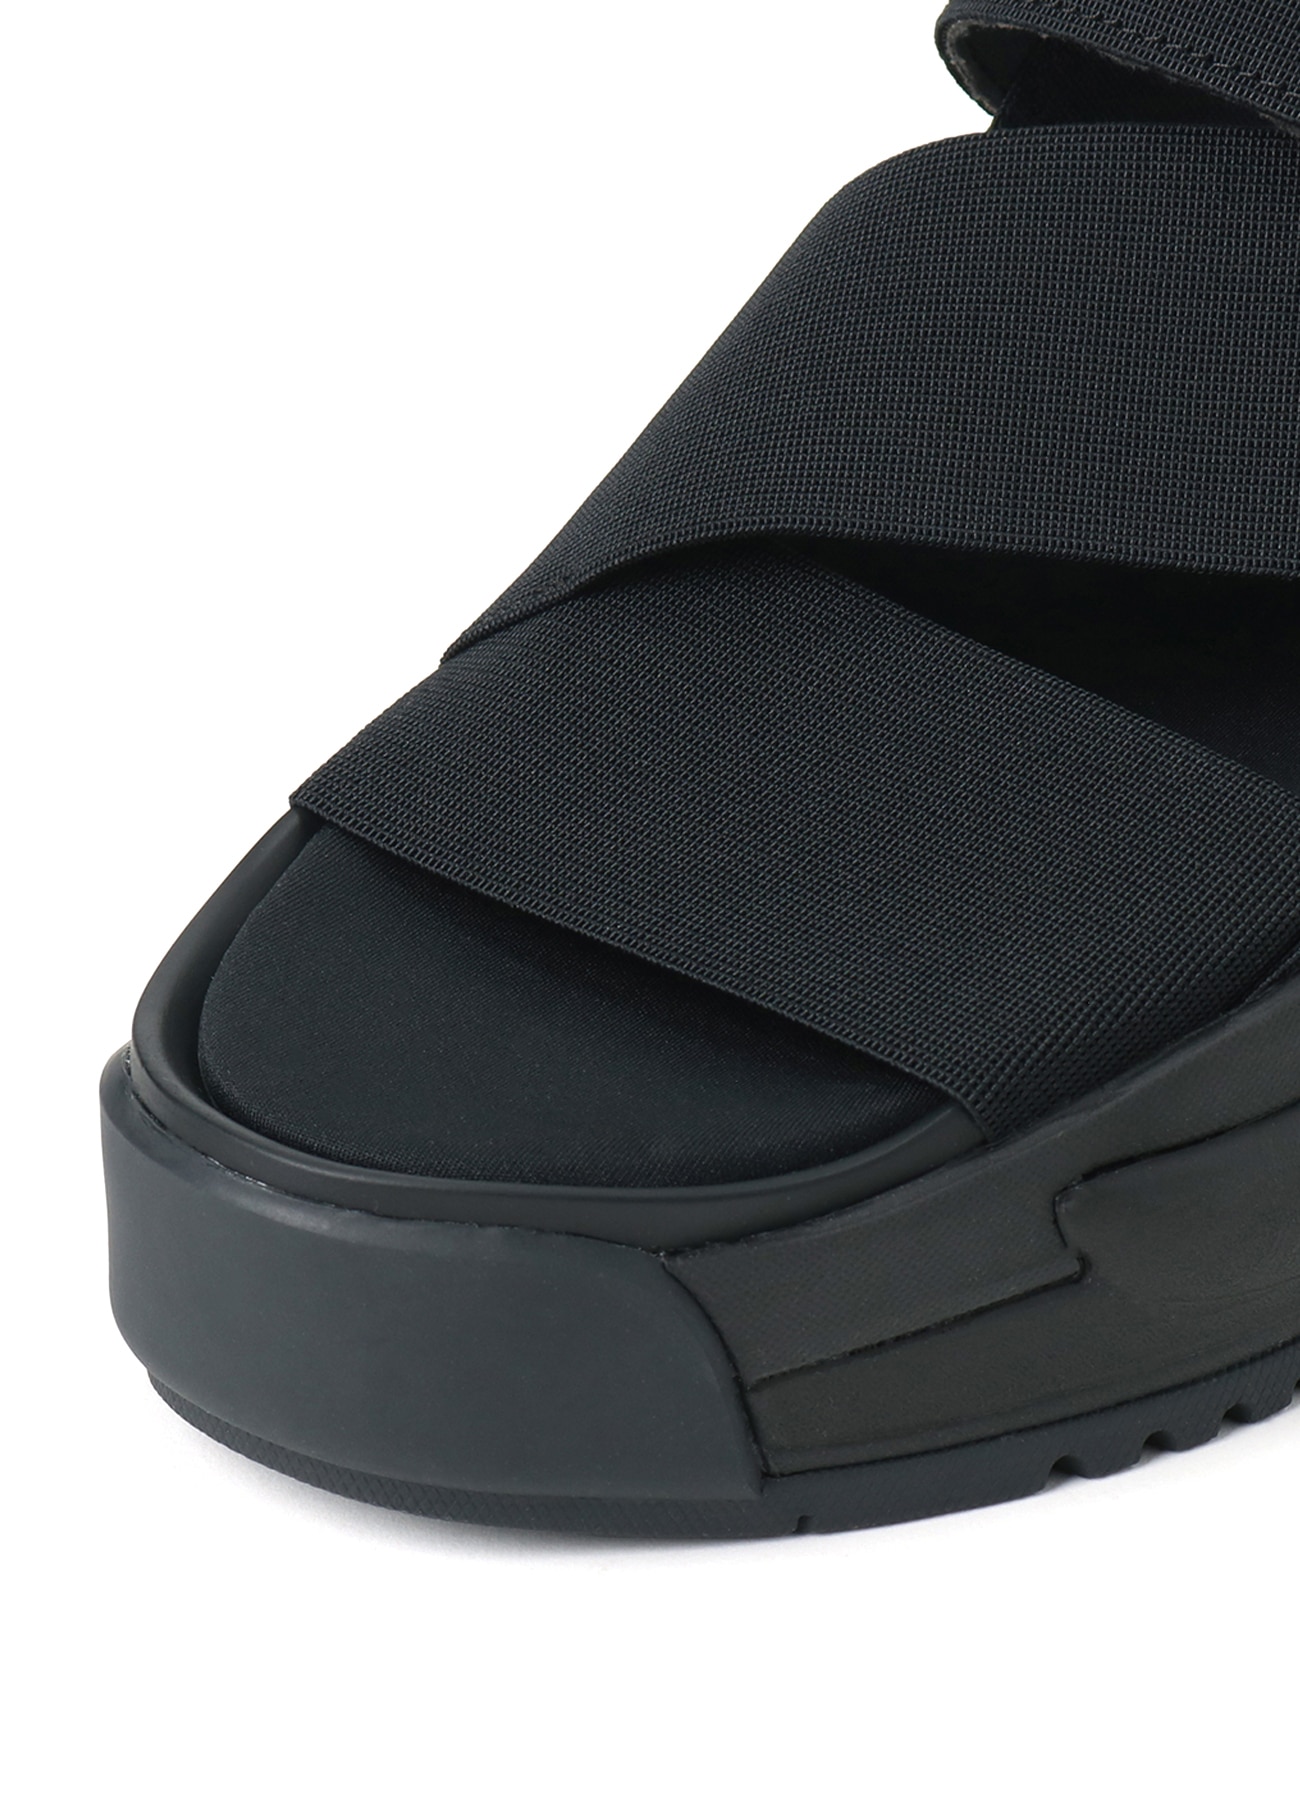 Y-3 Sandals, Sendo Za Y-3 Original, Yohji Yamamoto Sandals in Ilala -  Shoes, Beifair Products